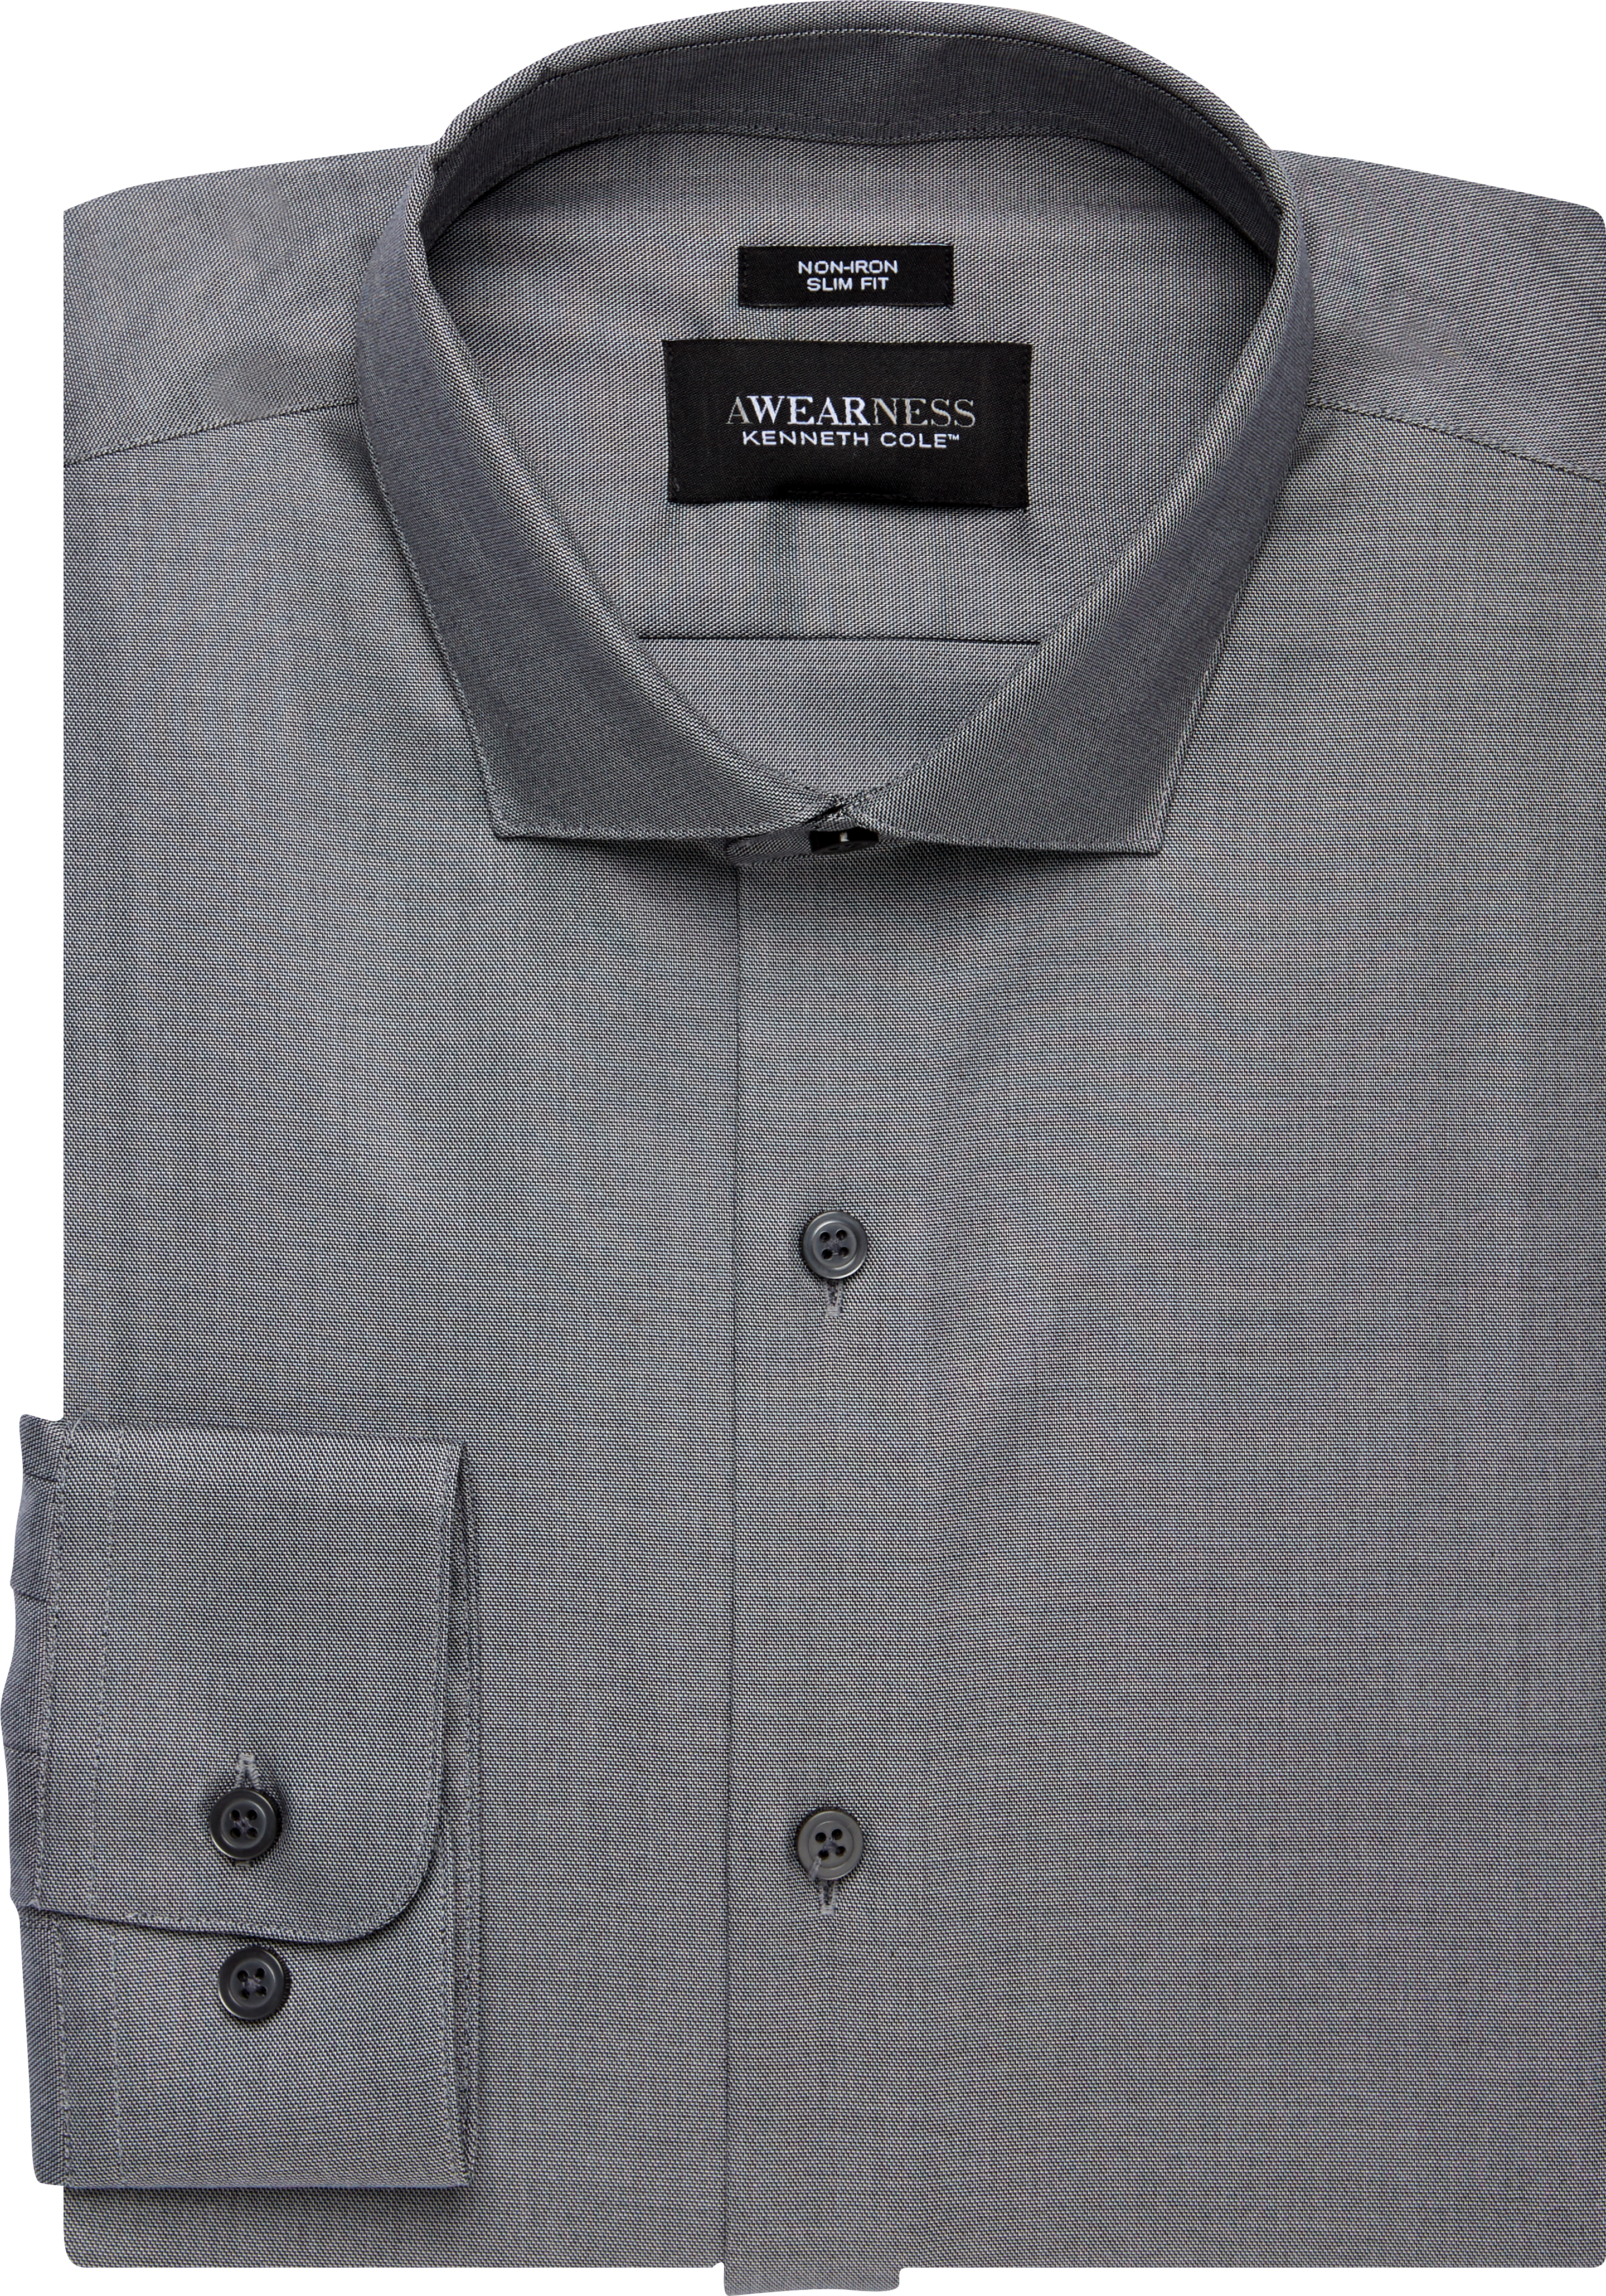 Awearness Kenneth Cole Gray Slim Fit Dress Shirt - Men's Sale | Men's ...